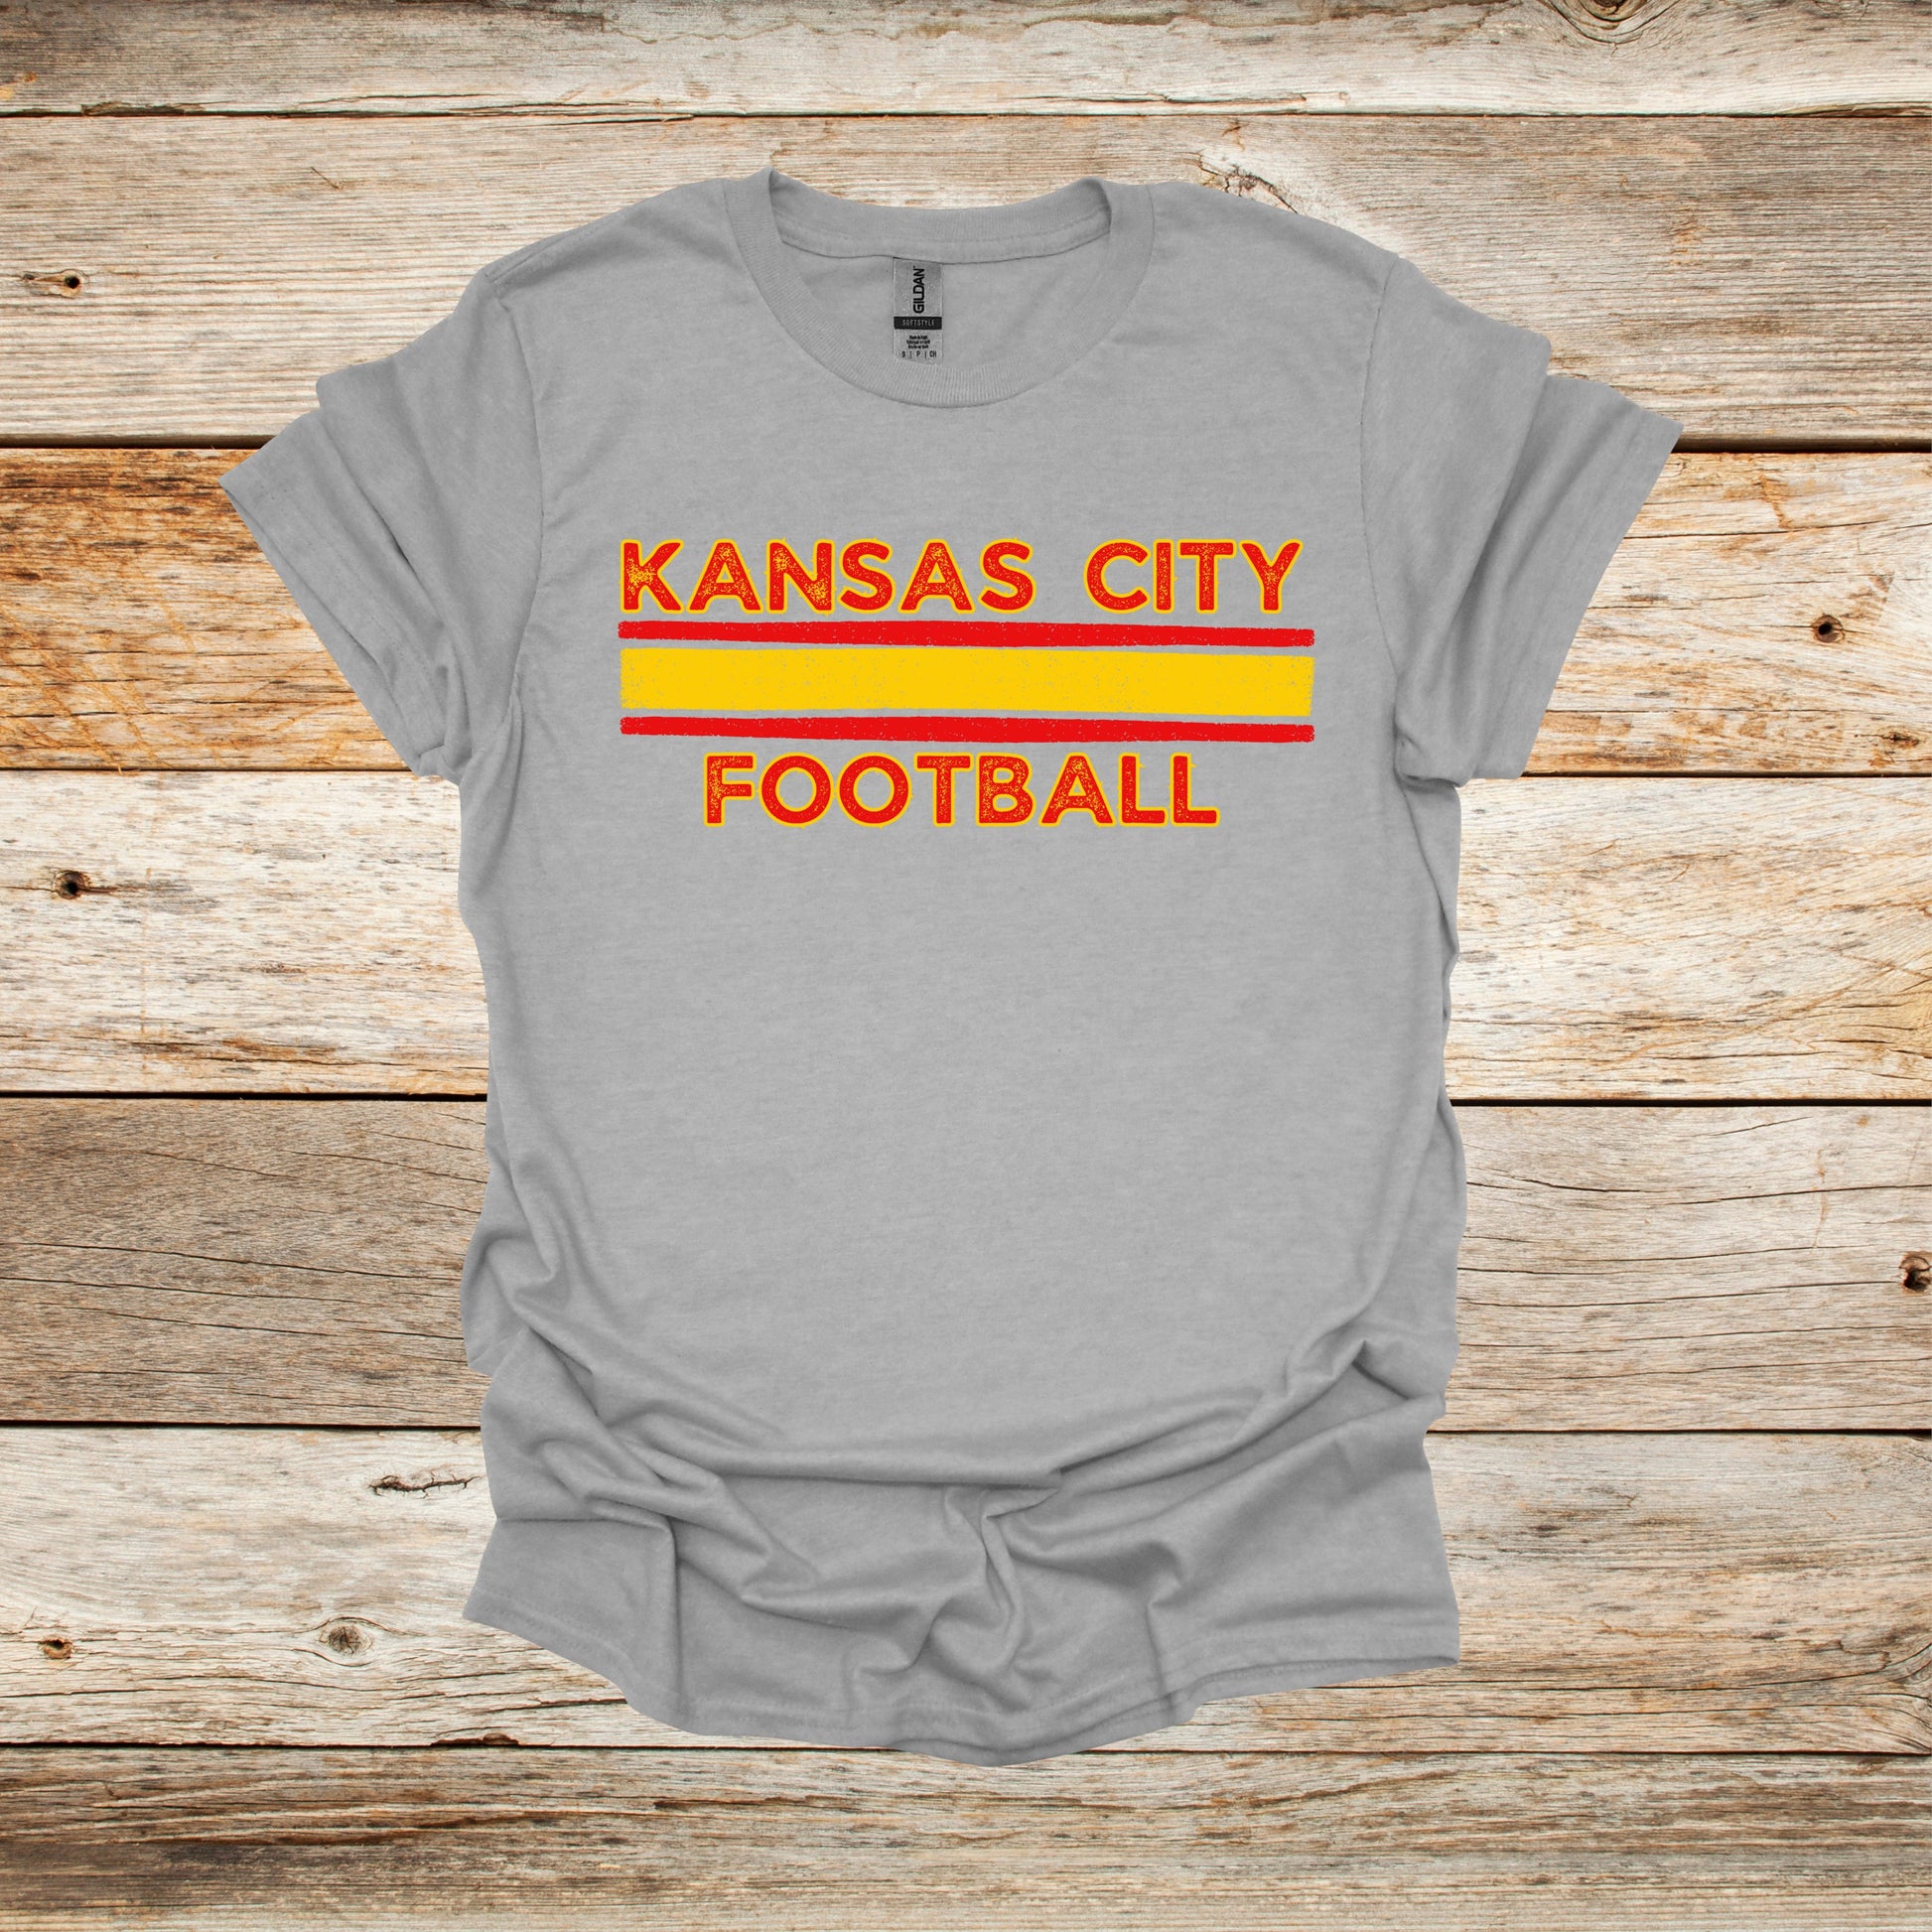 Football T-Shirt - Kansas City Chiefs - Kansas City Football - Adult and Children's Tee Shirts - Chiefs - Sports T-Shirts Graphic Avenue Sport Grey Adult Small 